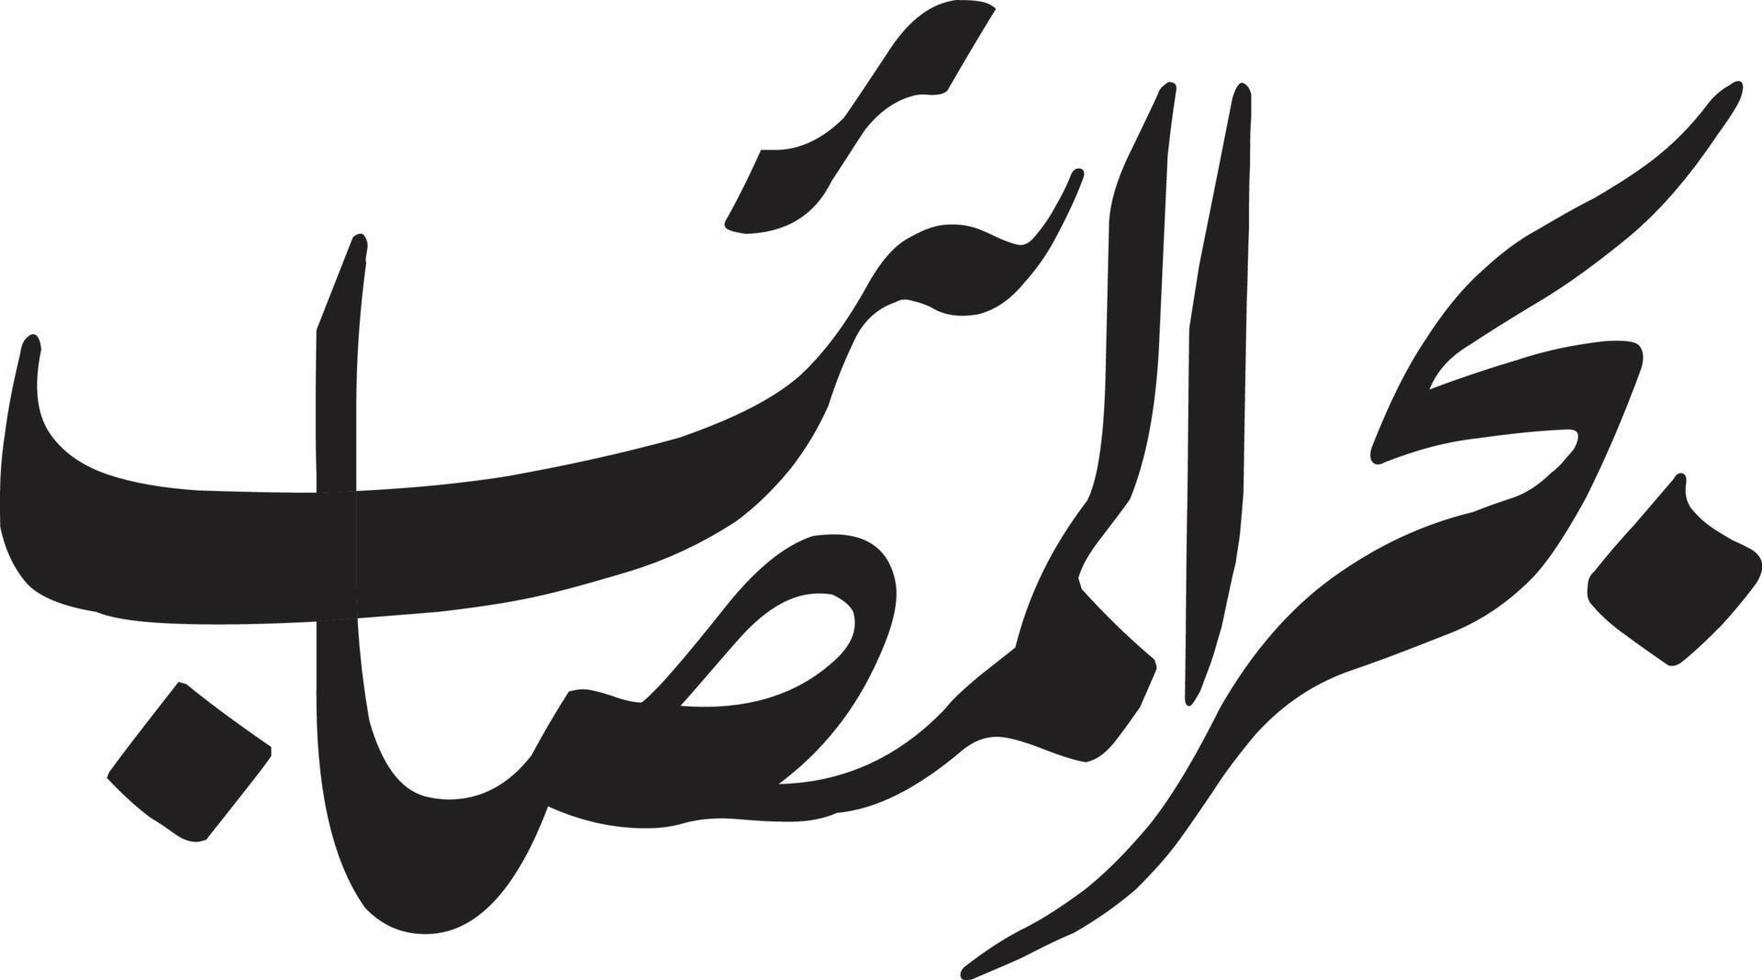 bhear al masiyeb título caligrafia islâmica vetor livre